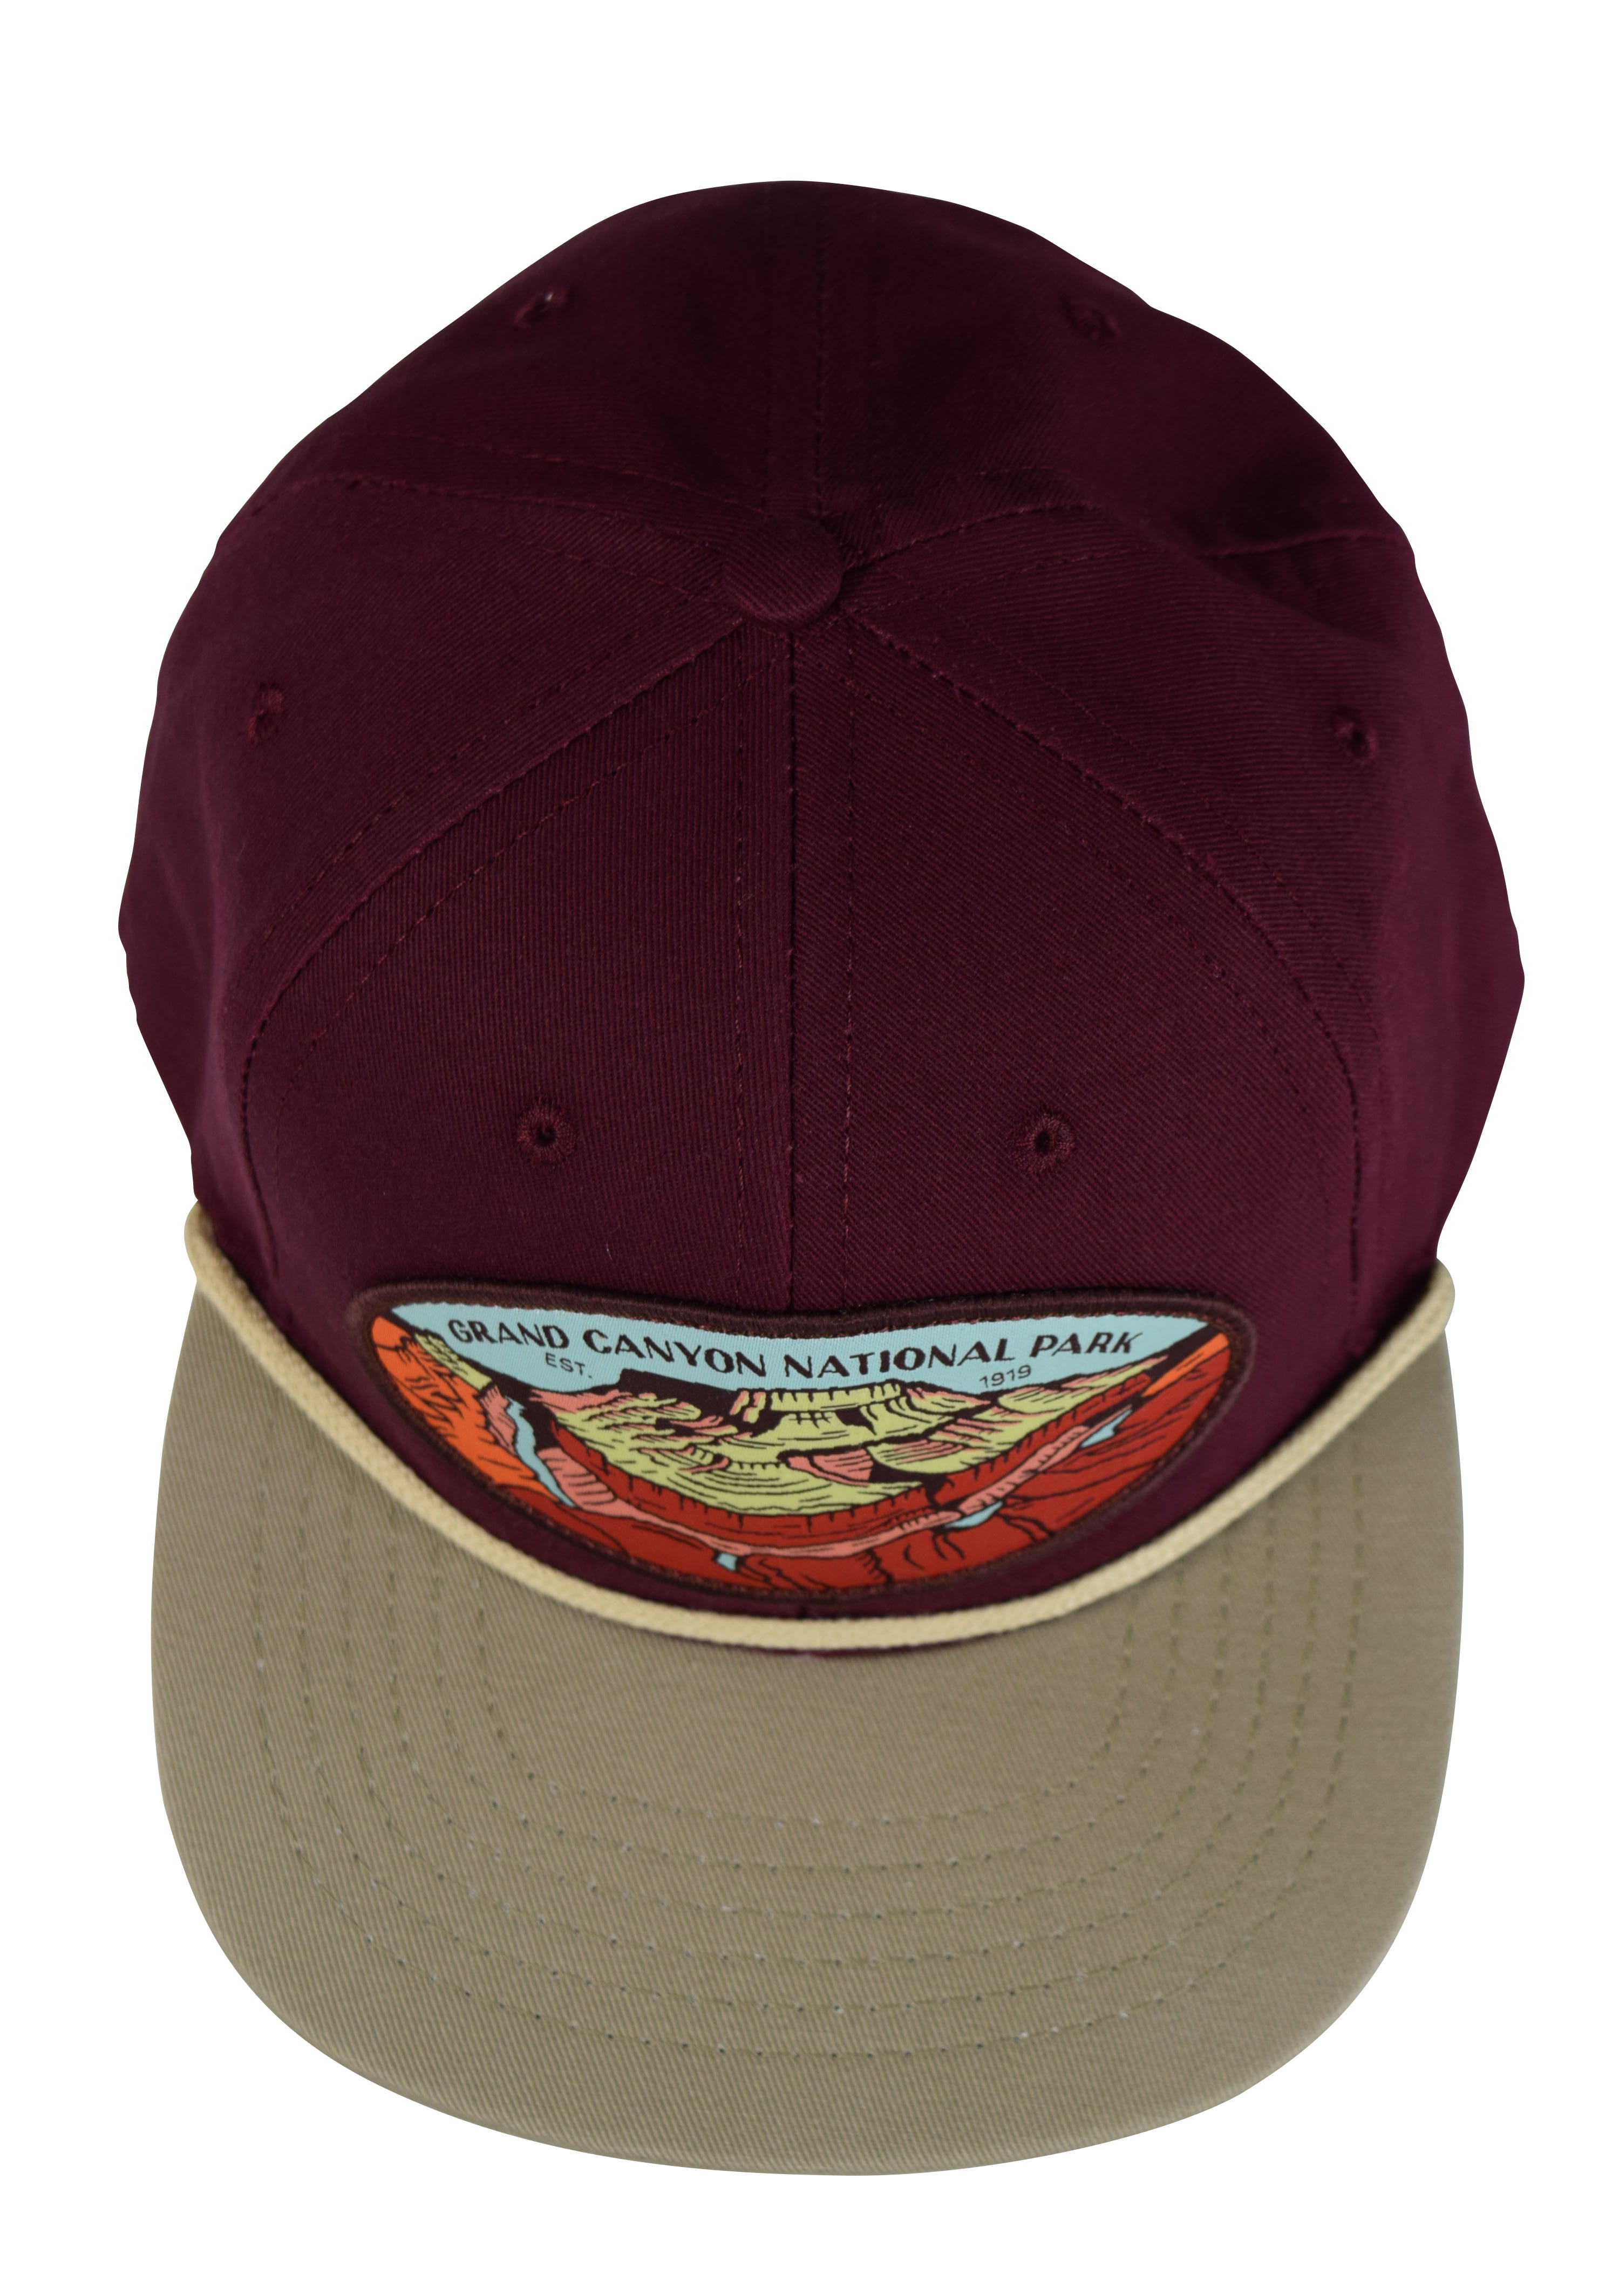 Sendero Provisions Co. Grand Canyon National Park Snapback Hat (Wine/Khaki)